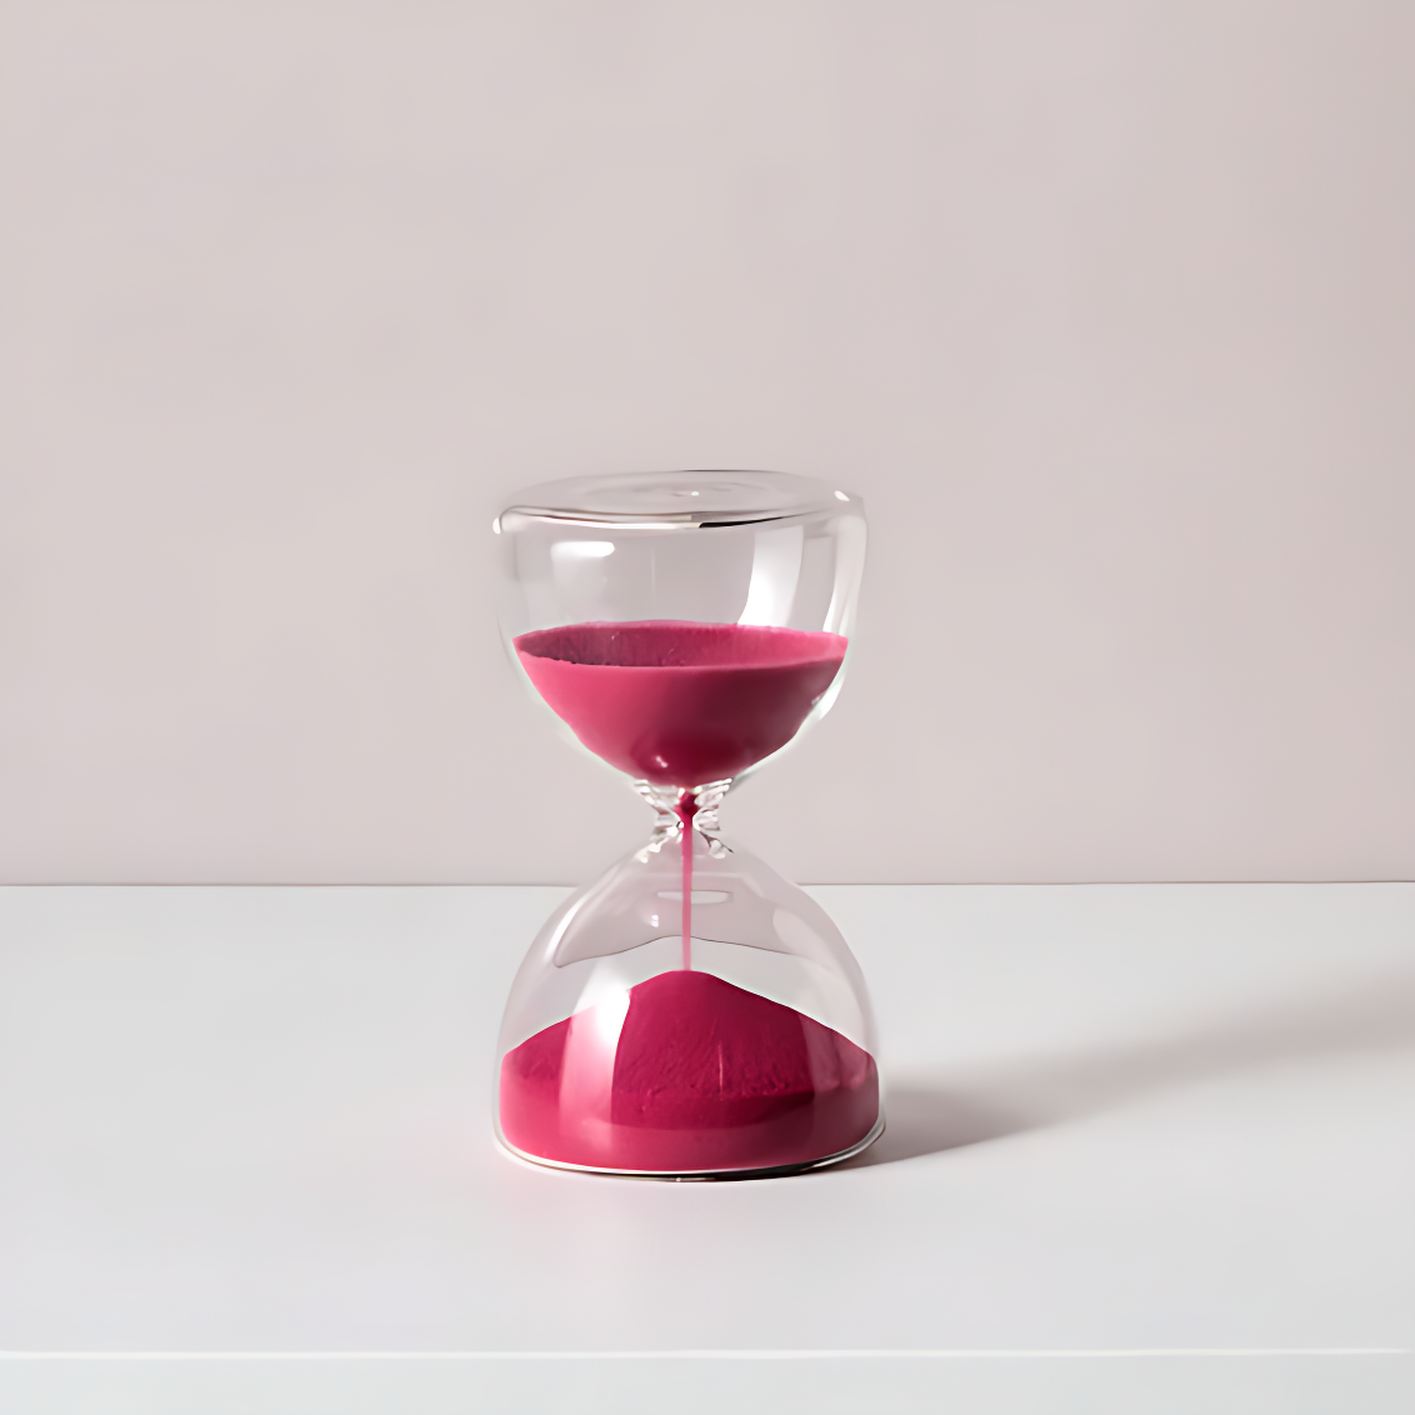 EFTERTÄNKADecorative hourglass, clear glass/bright pink, 10 cm